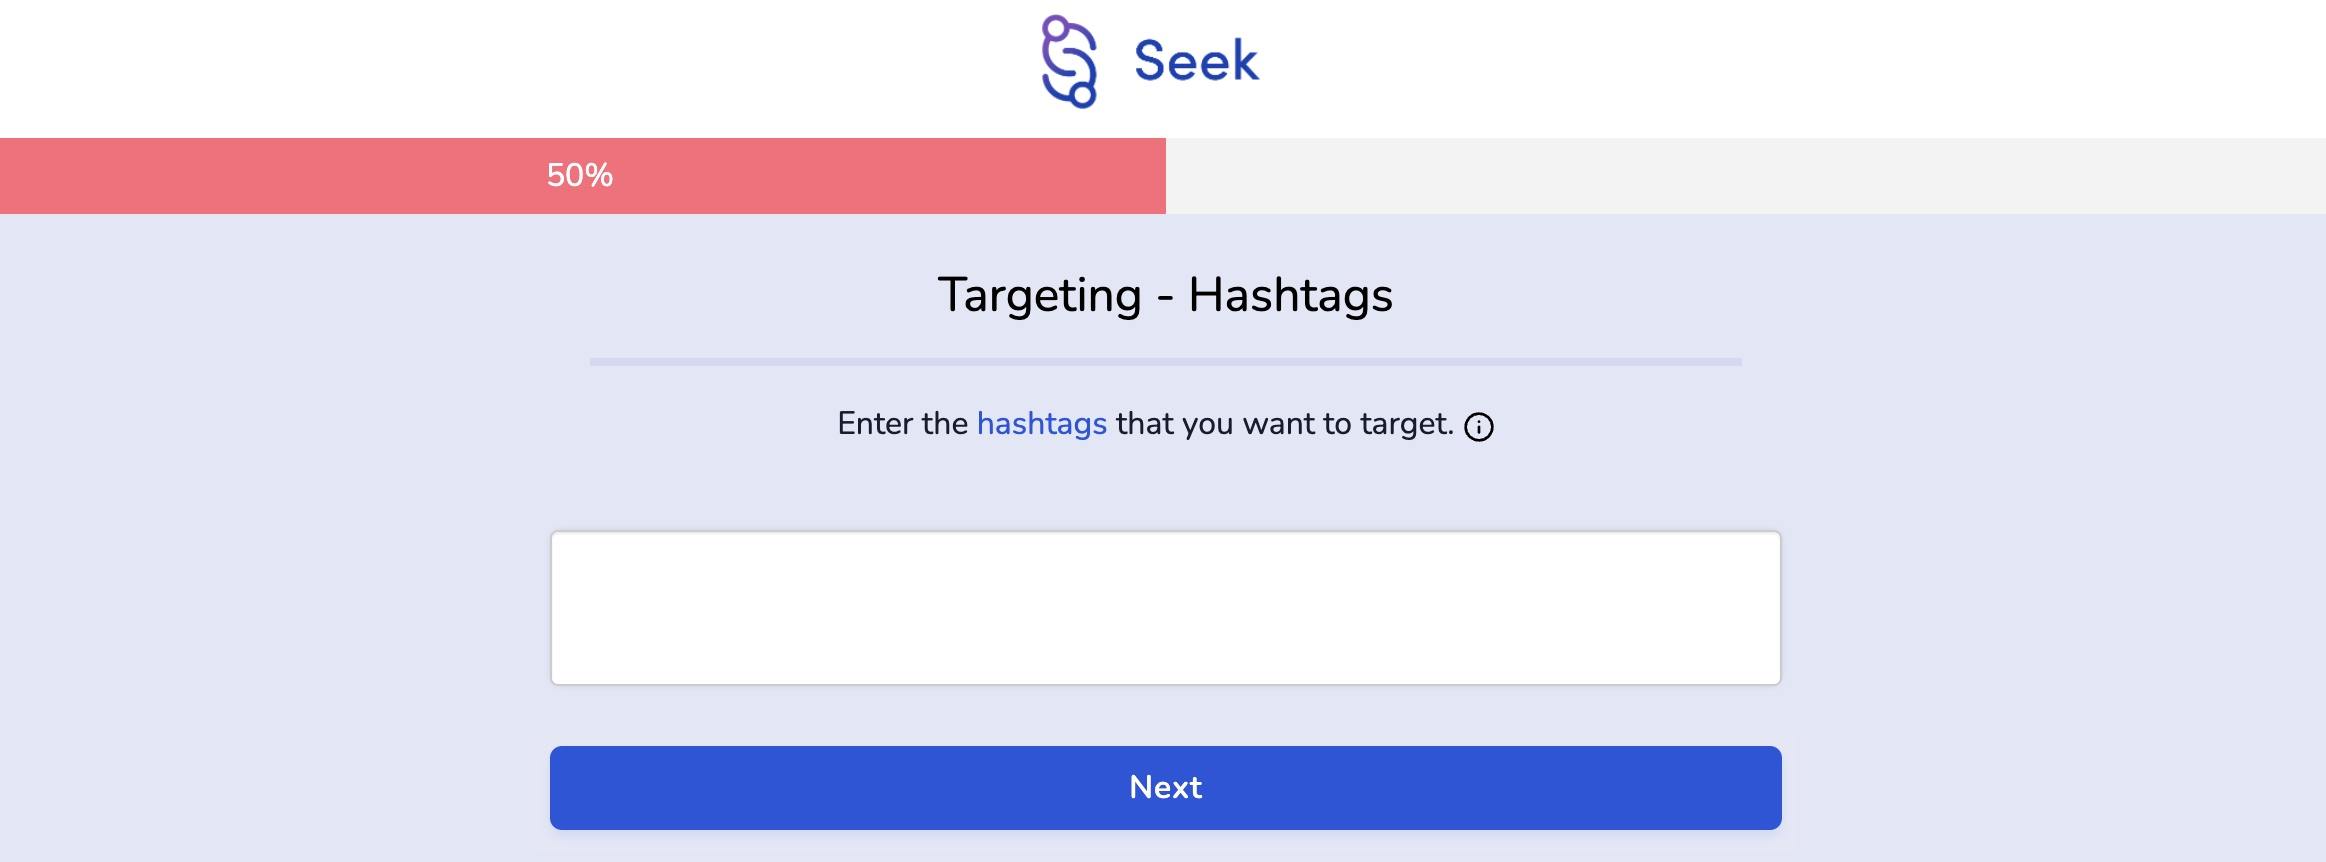 seek socially hashtag targeting